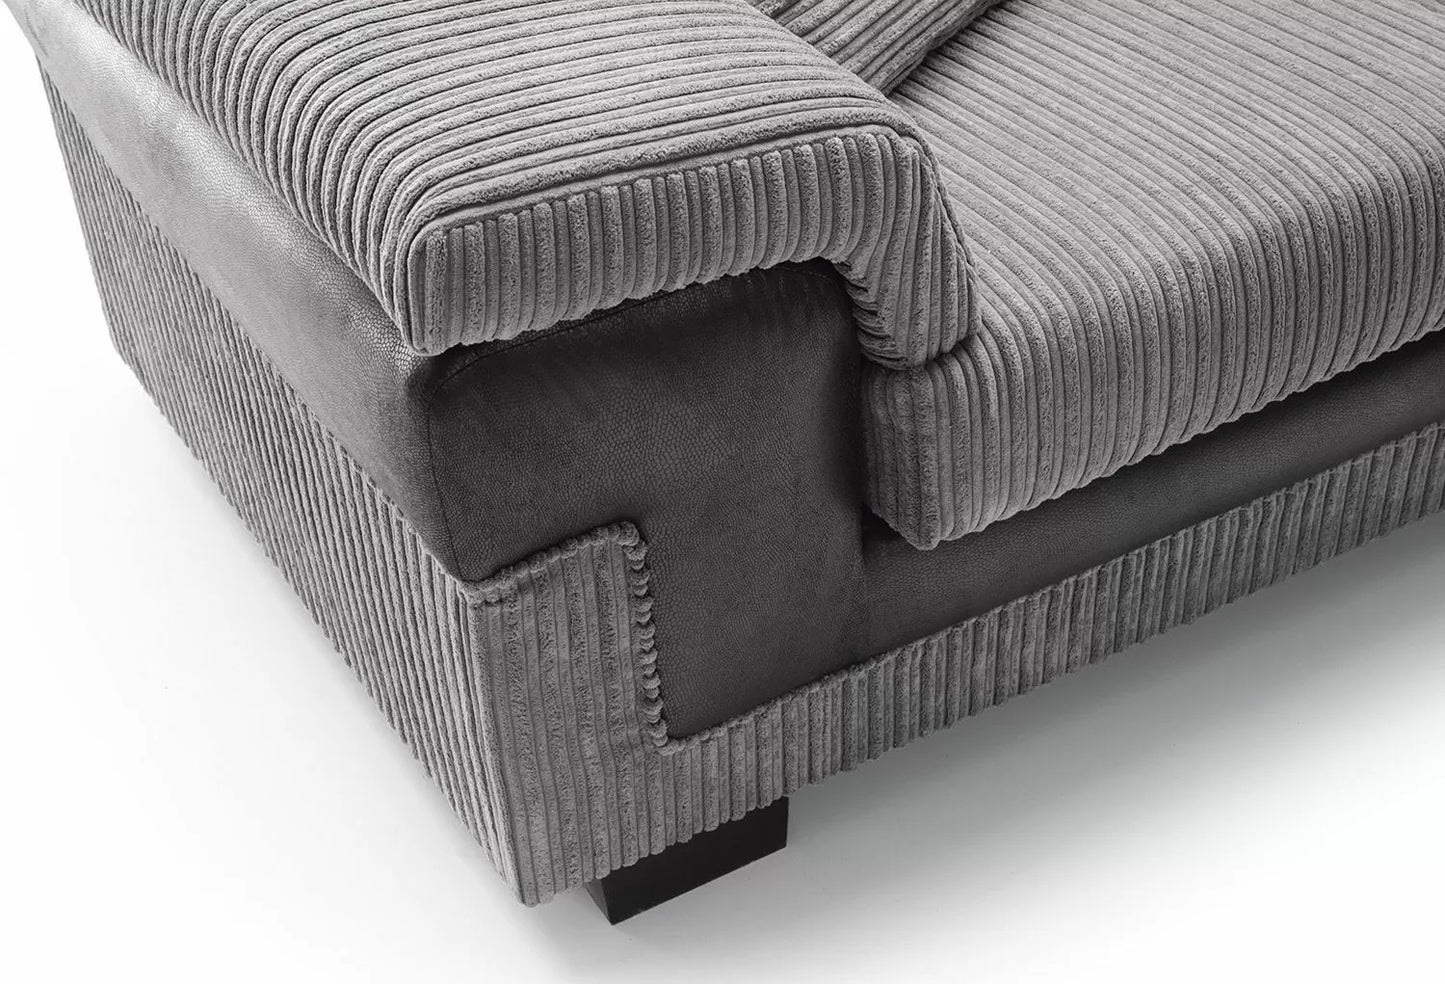 Samson Corded Fabric 2 Seater Sofa